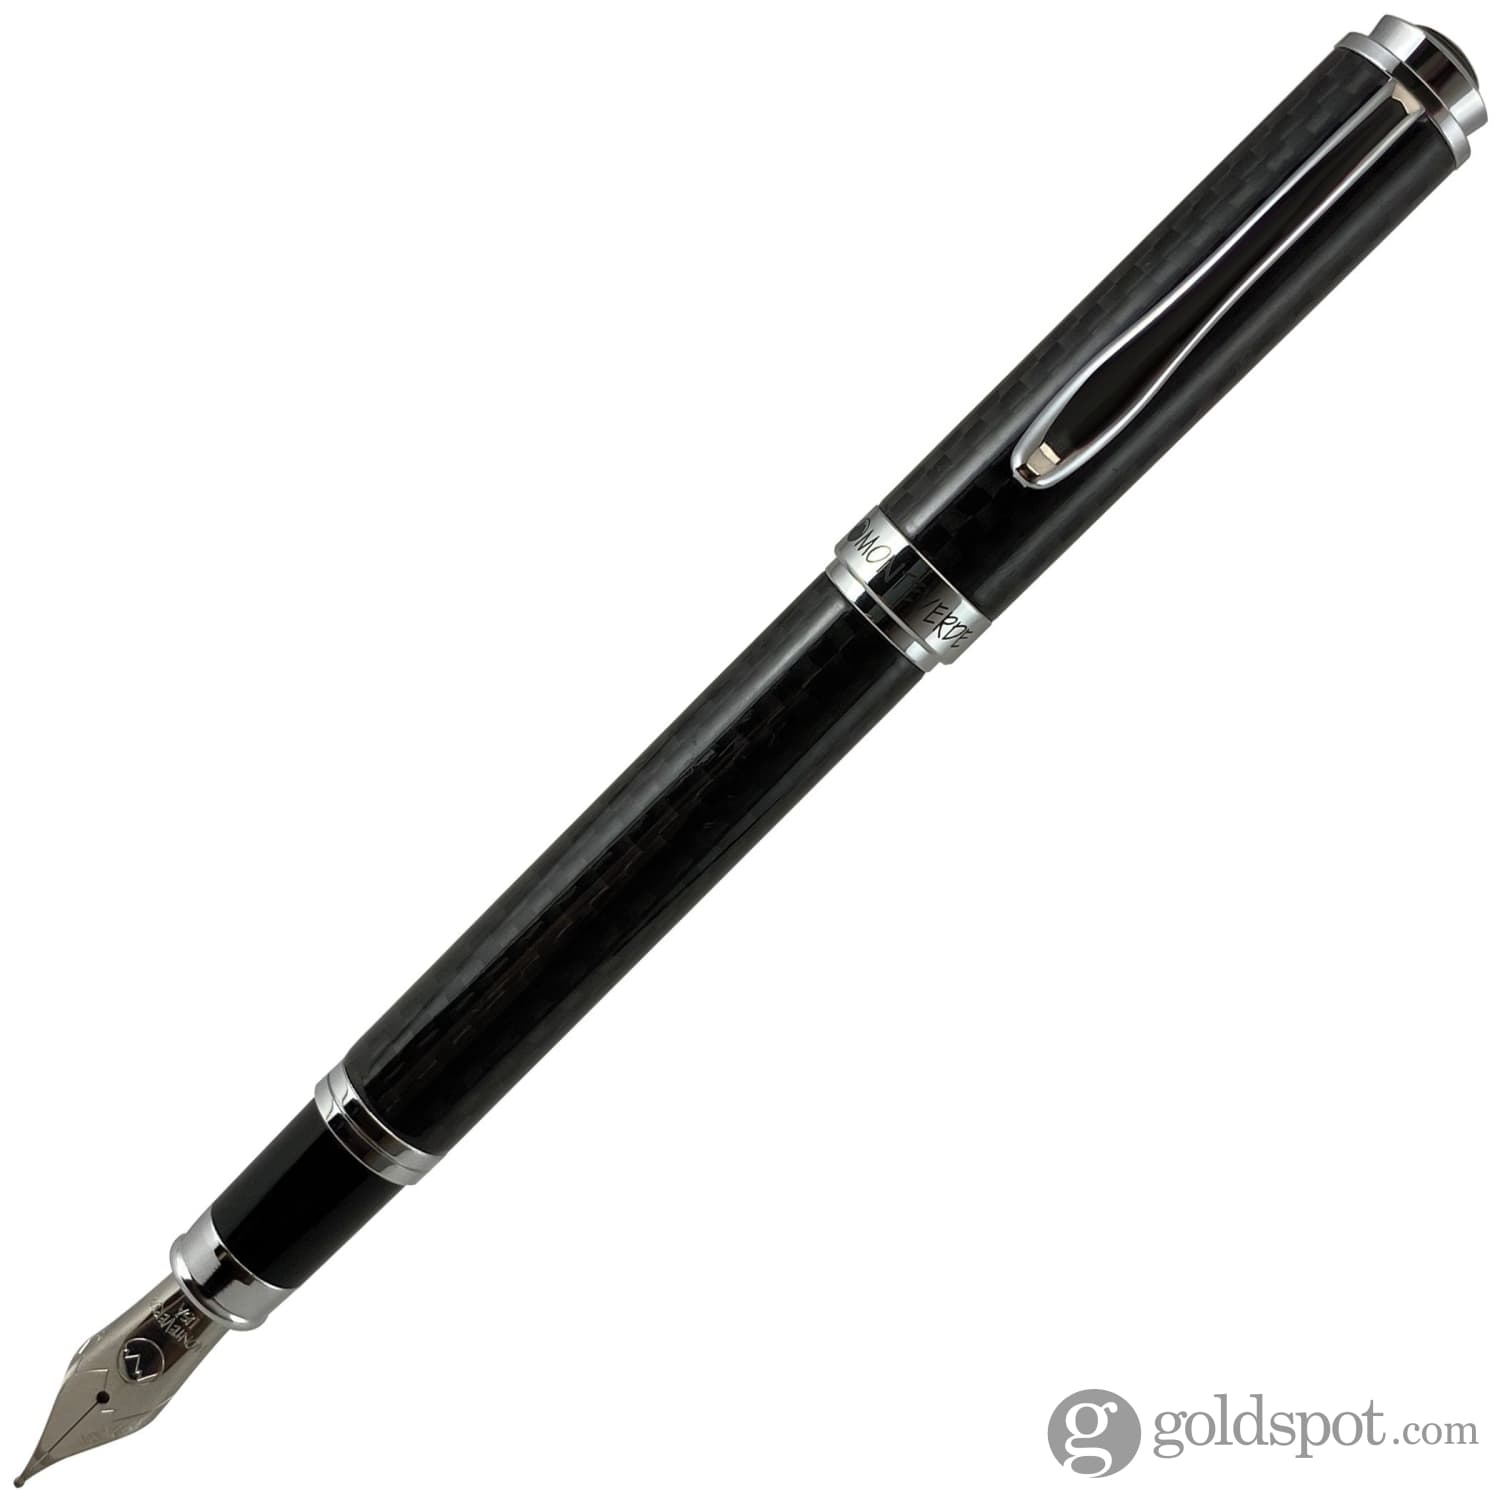 Wordsworth & Black Fountain Pen, Medium Nib Ink Pen, Black Chrome